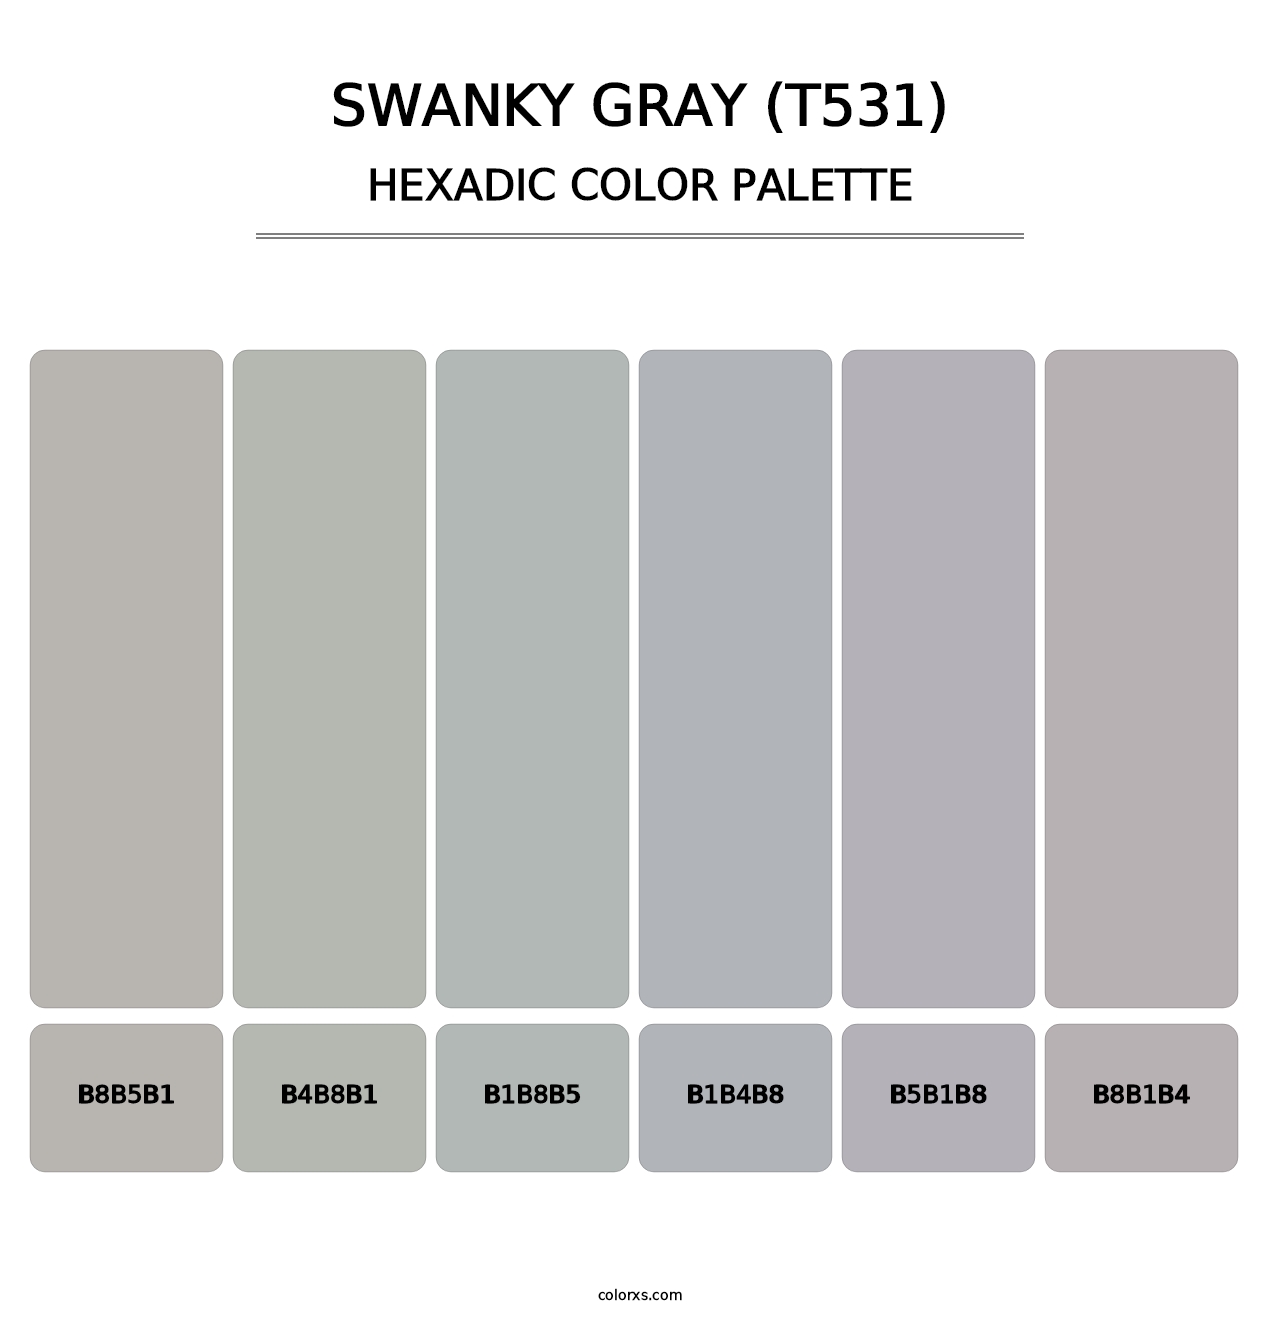 Swanky Gray (T531) - Hexadic Color Palette